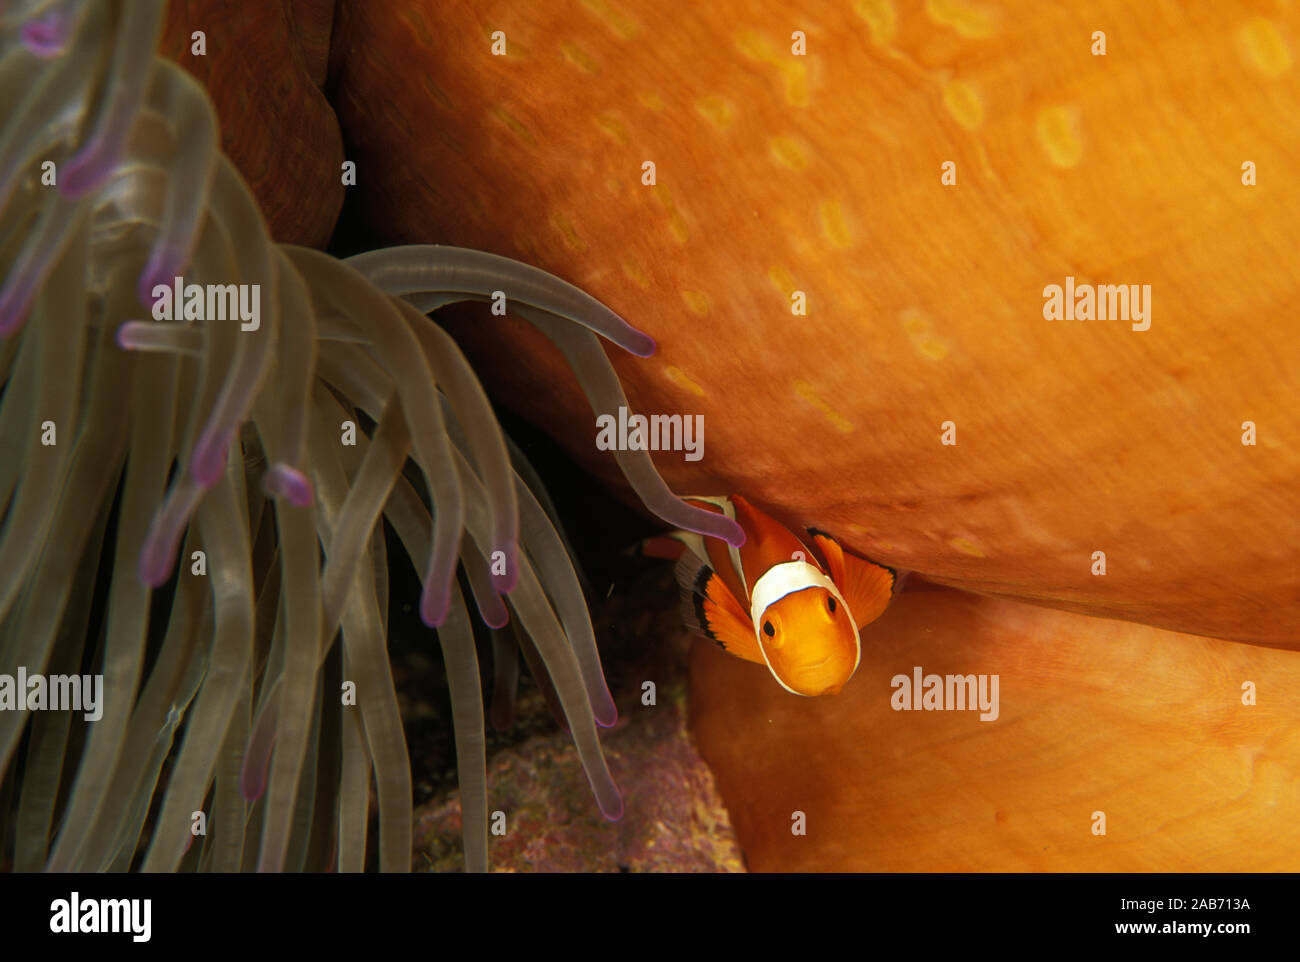 Clown anemonefish (Amphiprion ocellaris), in host (anemone Heteractis magnifica). Manado, Indonesia Foto Stock